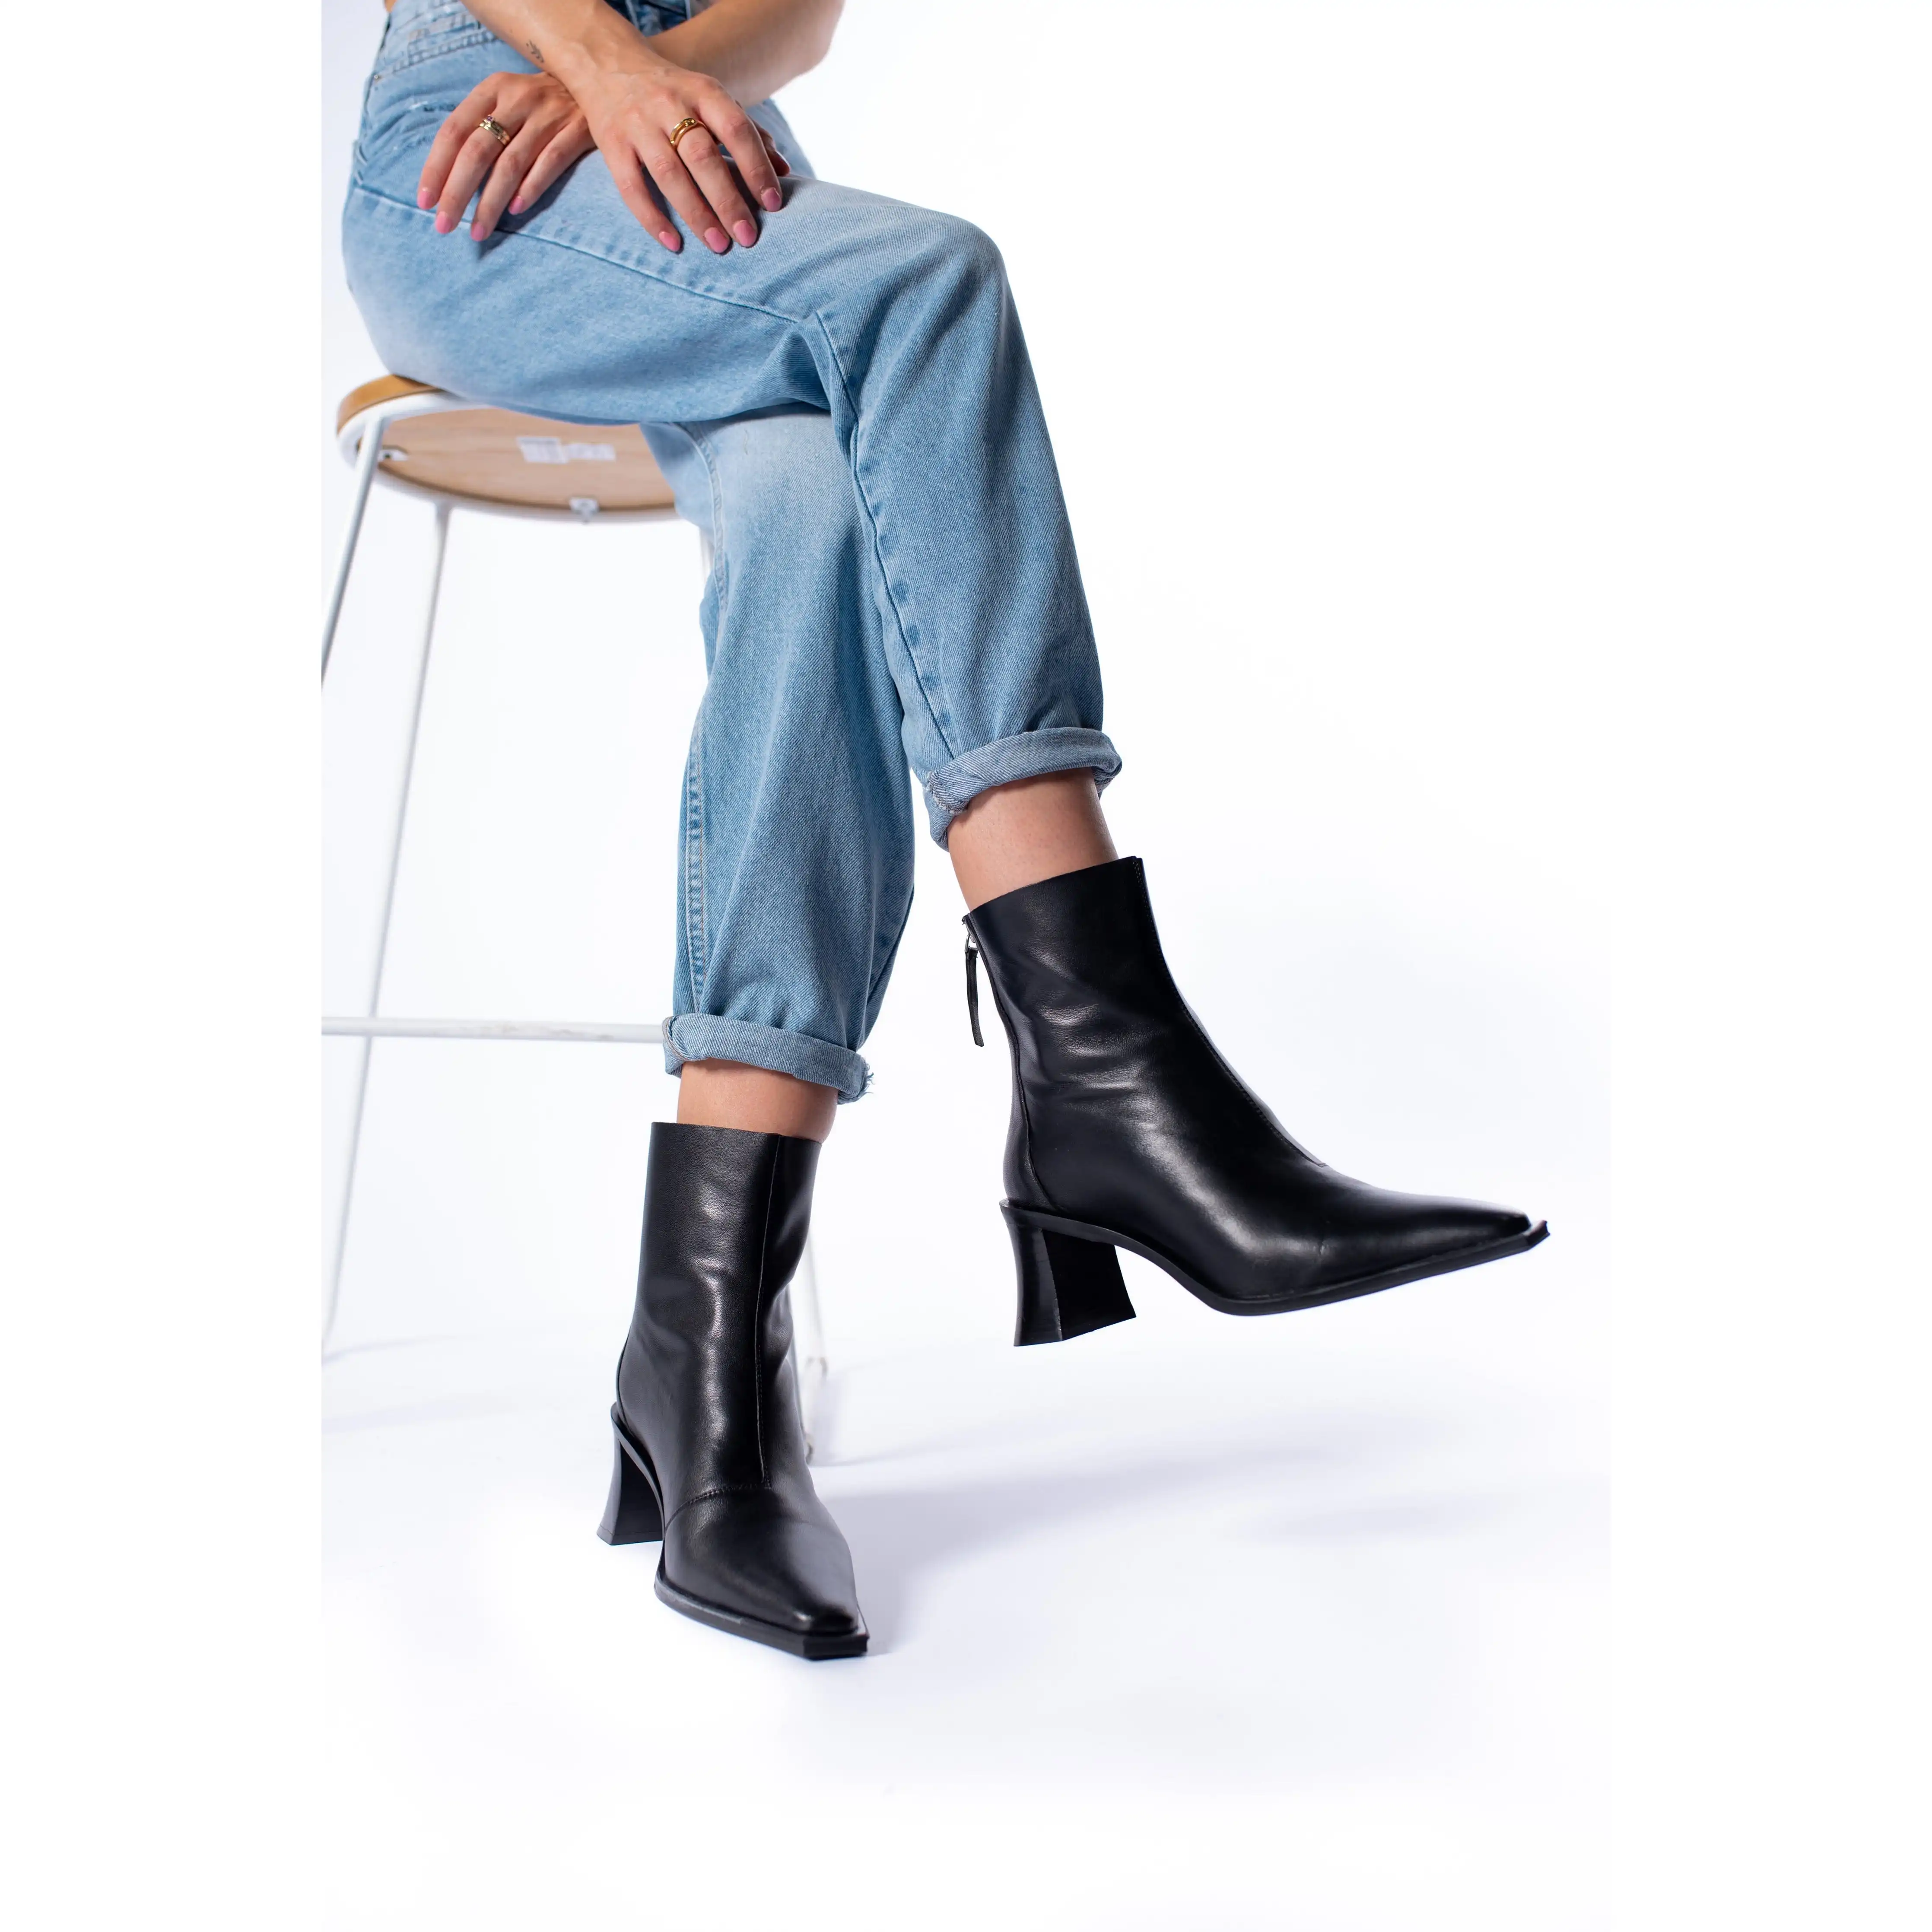 Topshop Women's Black Leather Designer Ankle Boot